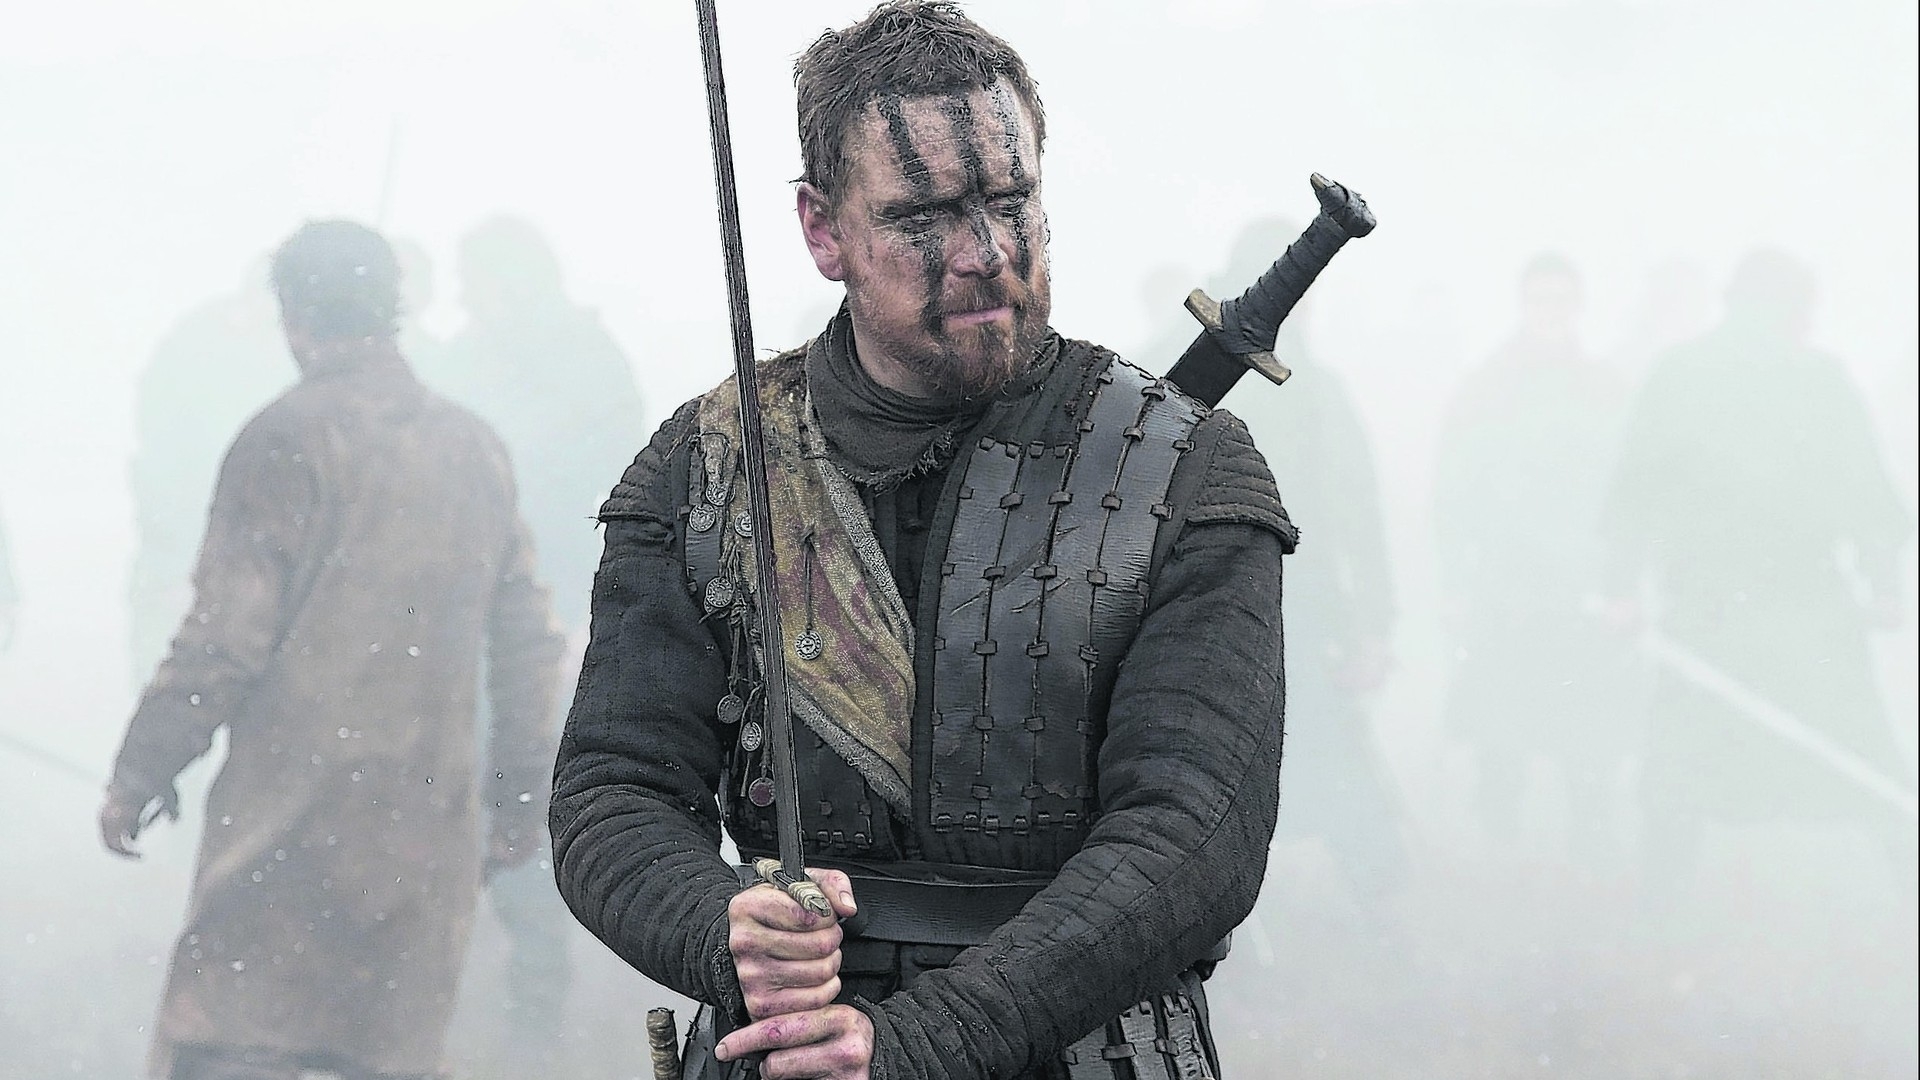 Macbeth in Battle for 1920 x 1080 HDTV 1080p resolution